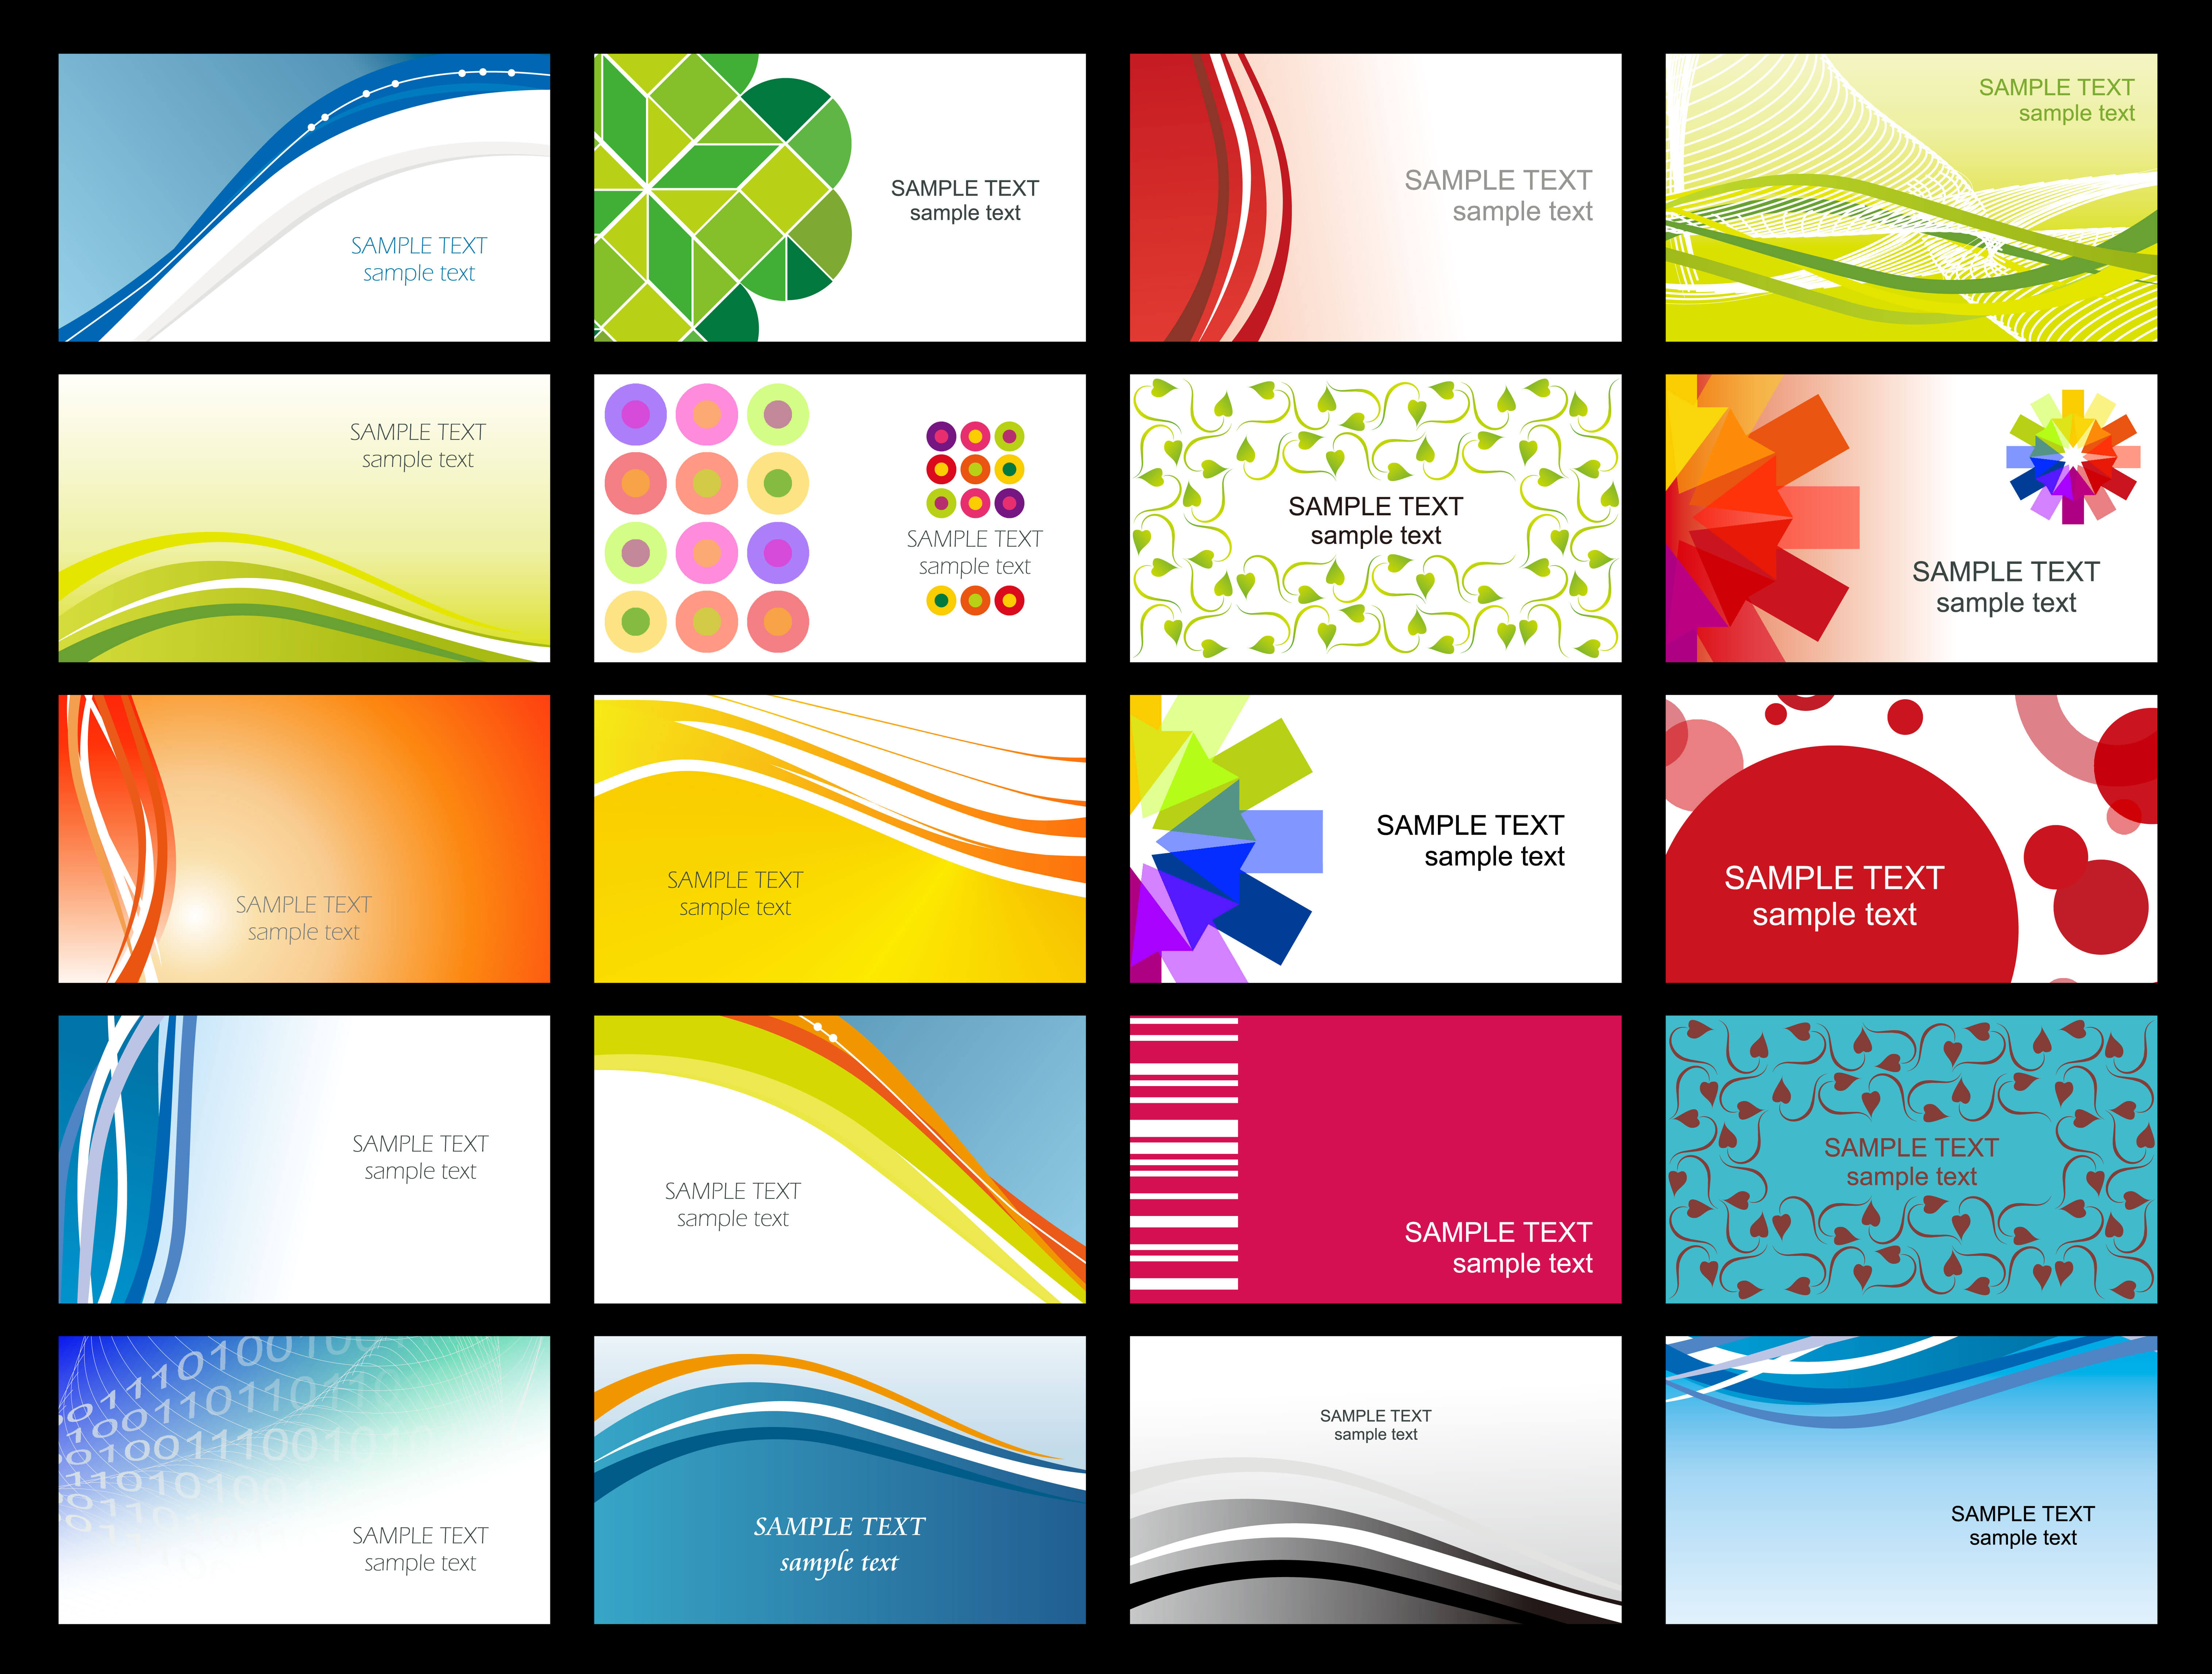 Free Printable Business Card Templates Sample | Get Sniffer For Free Template Business Cards To Print